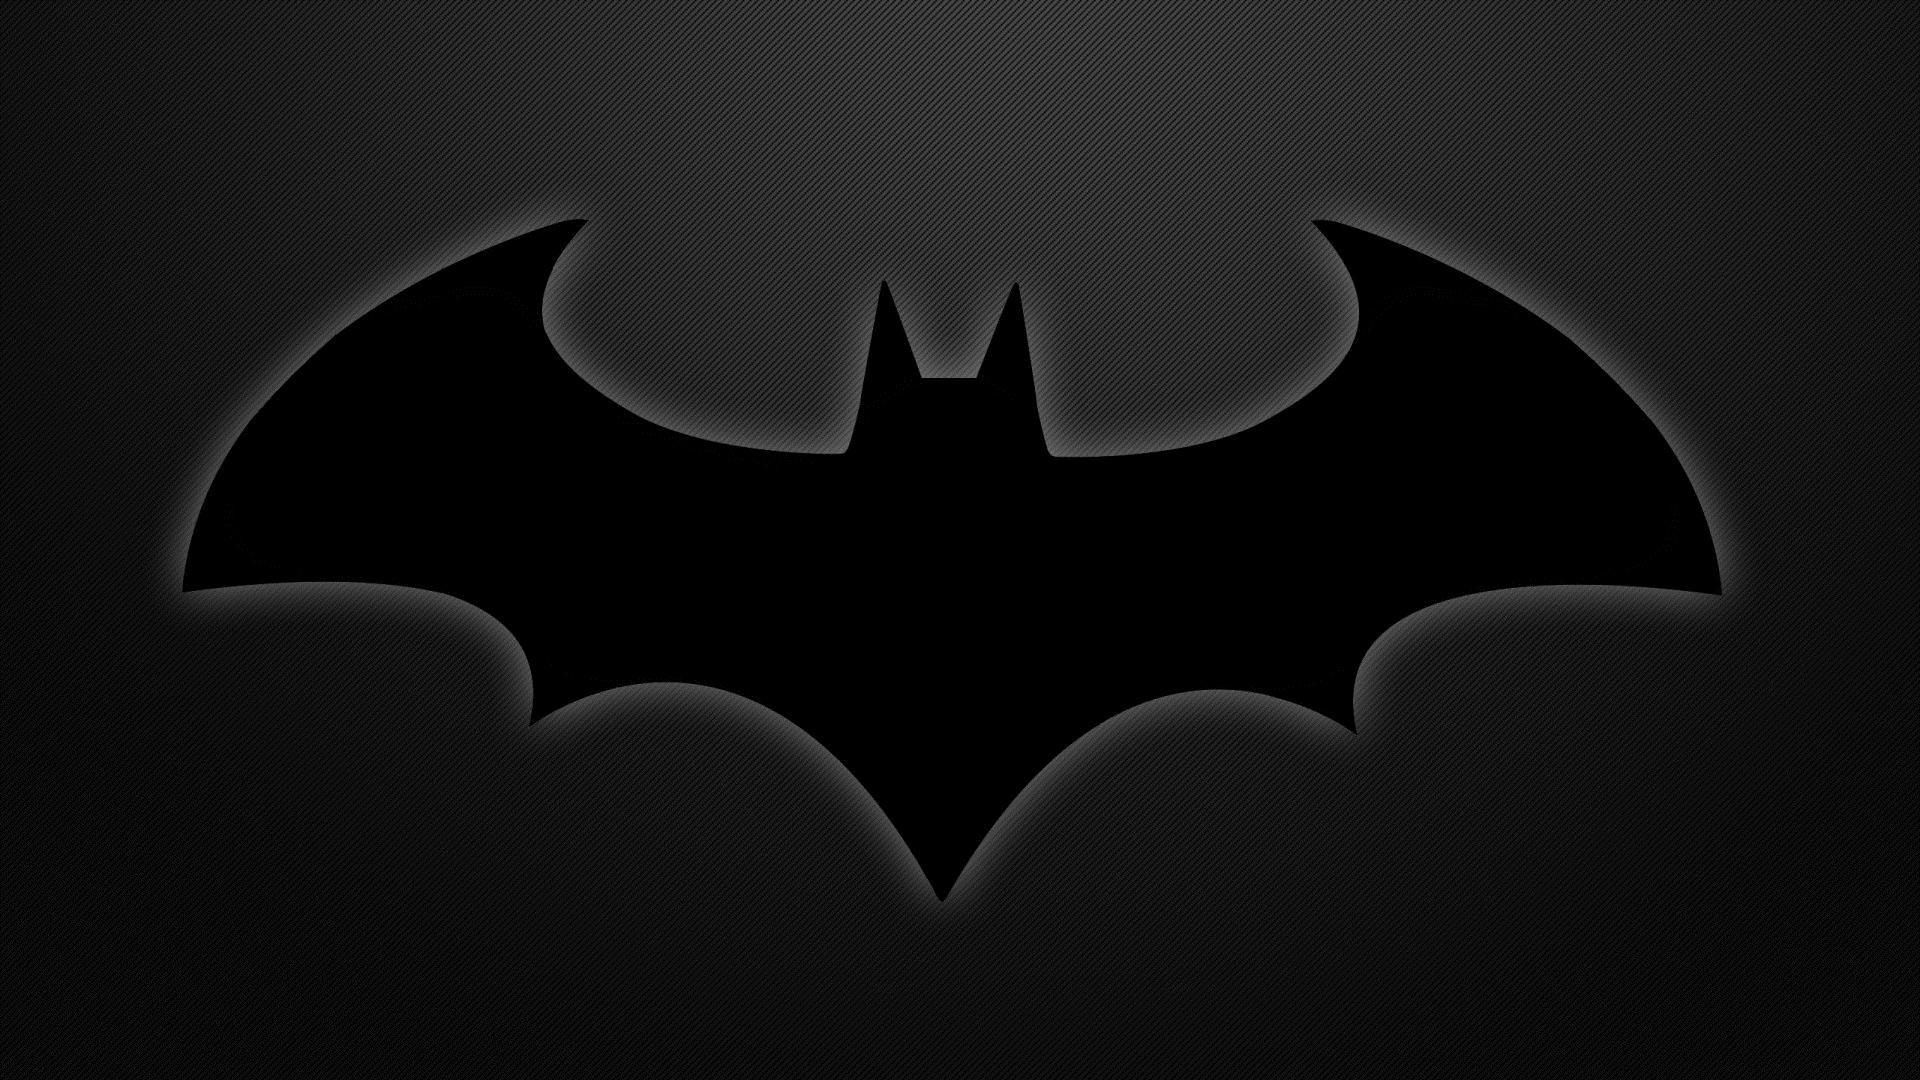 Free Batman Logo Jpg, Download Free Clip Art, Free Clip Art on Clipart Library